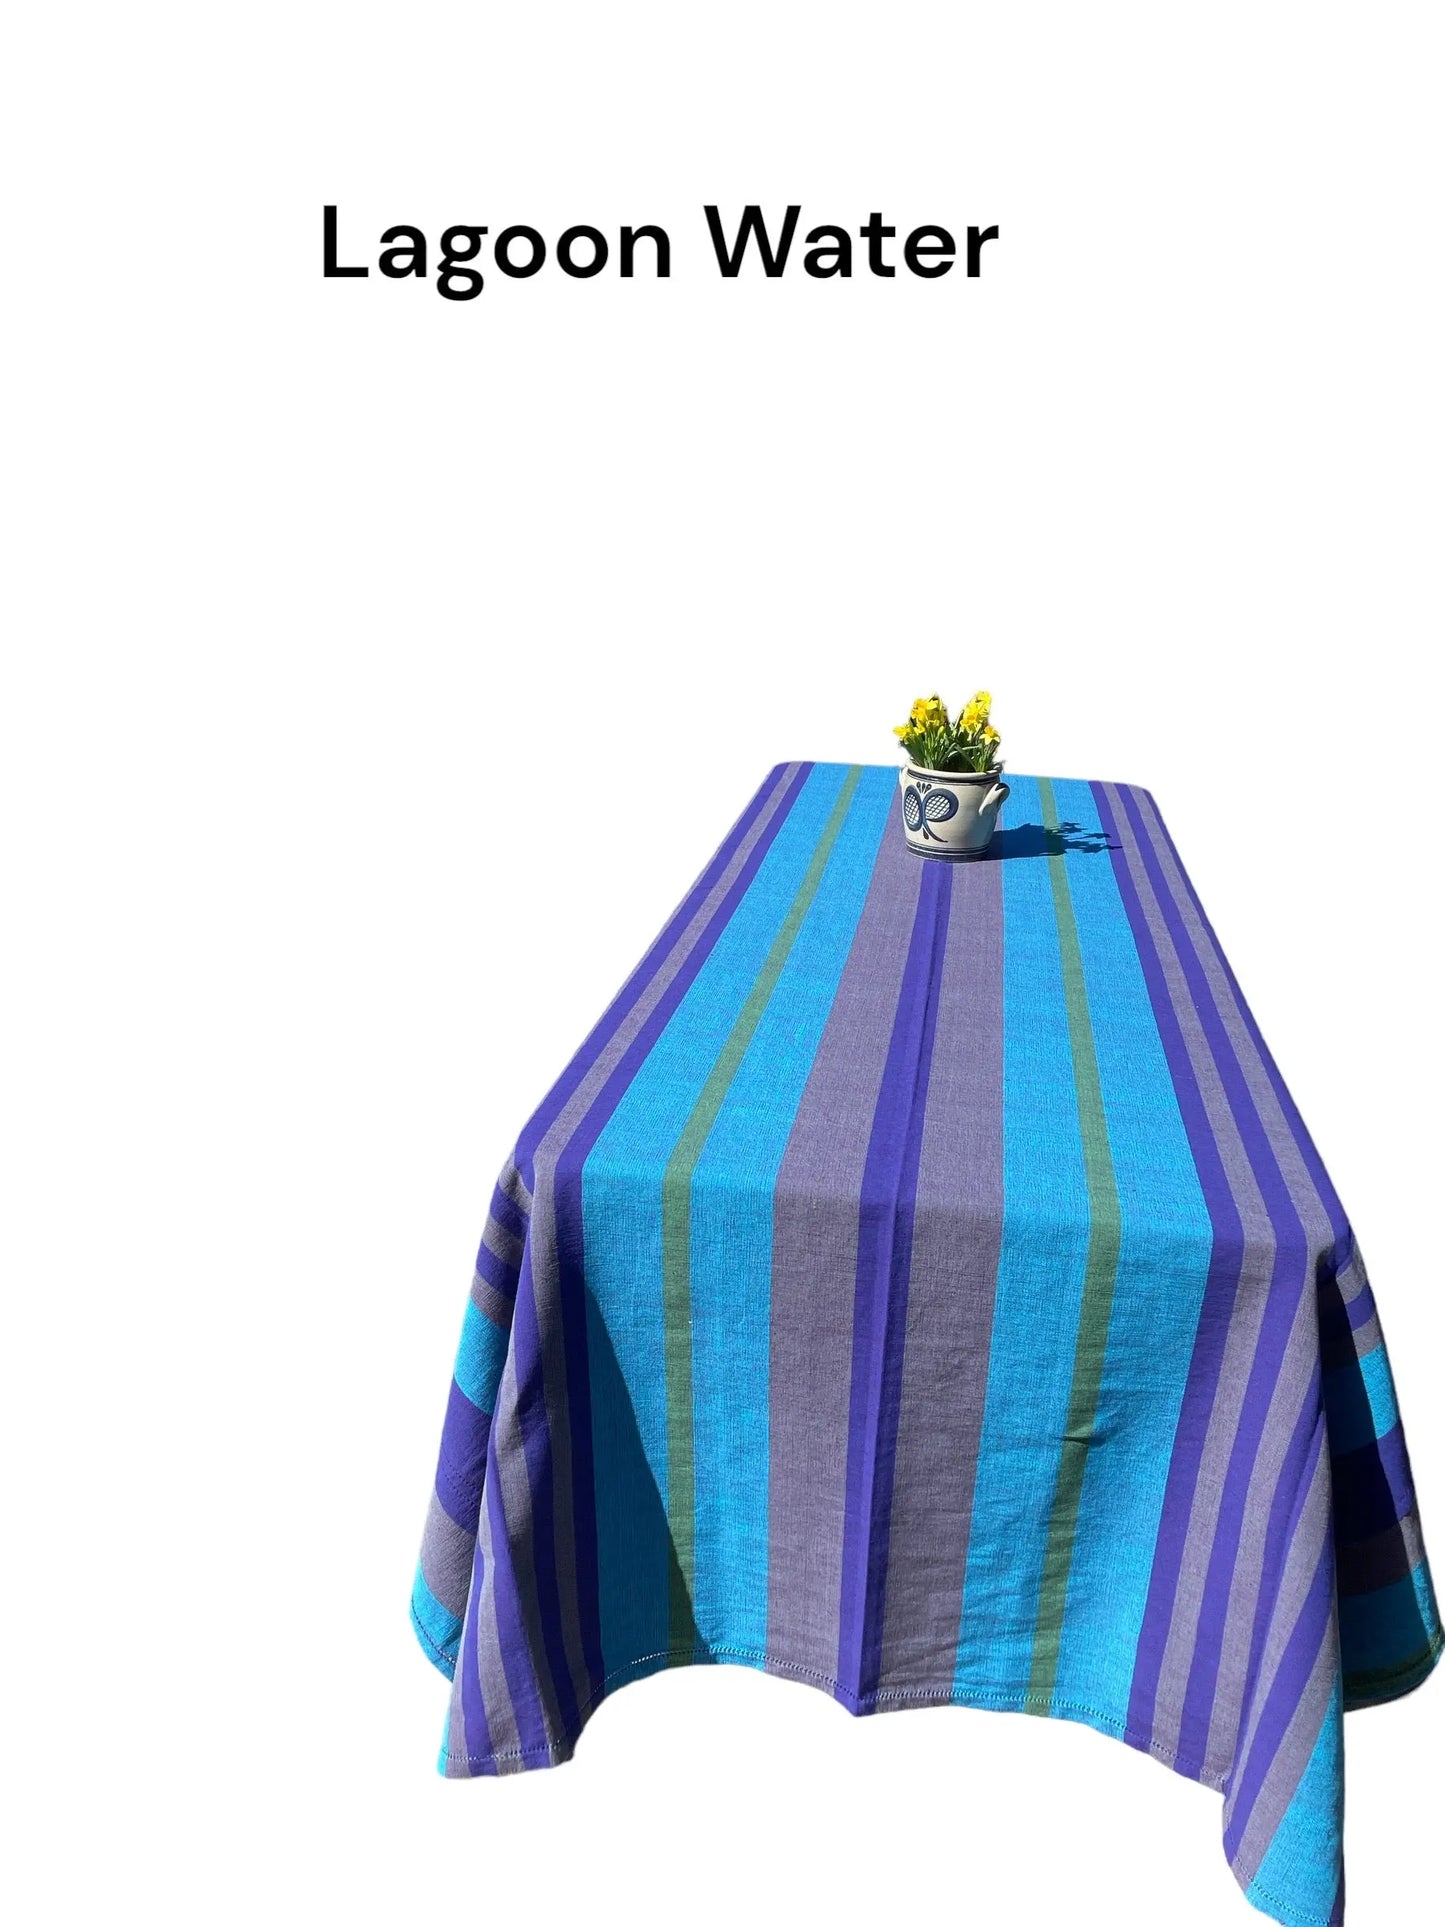 Duk "Lagoon Water" MouseTales